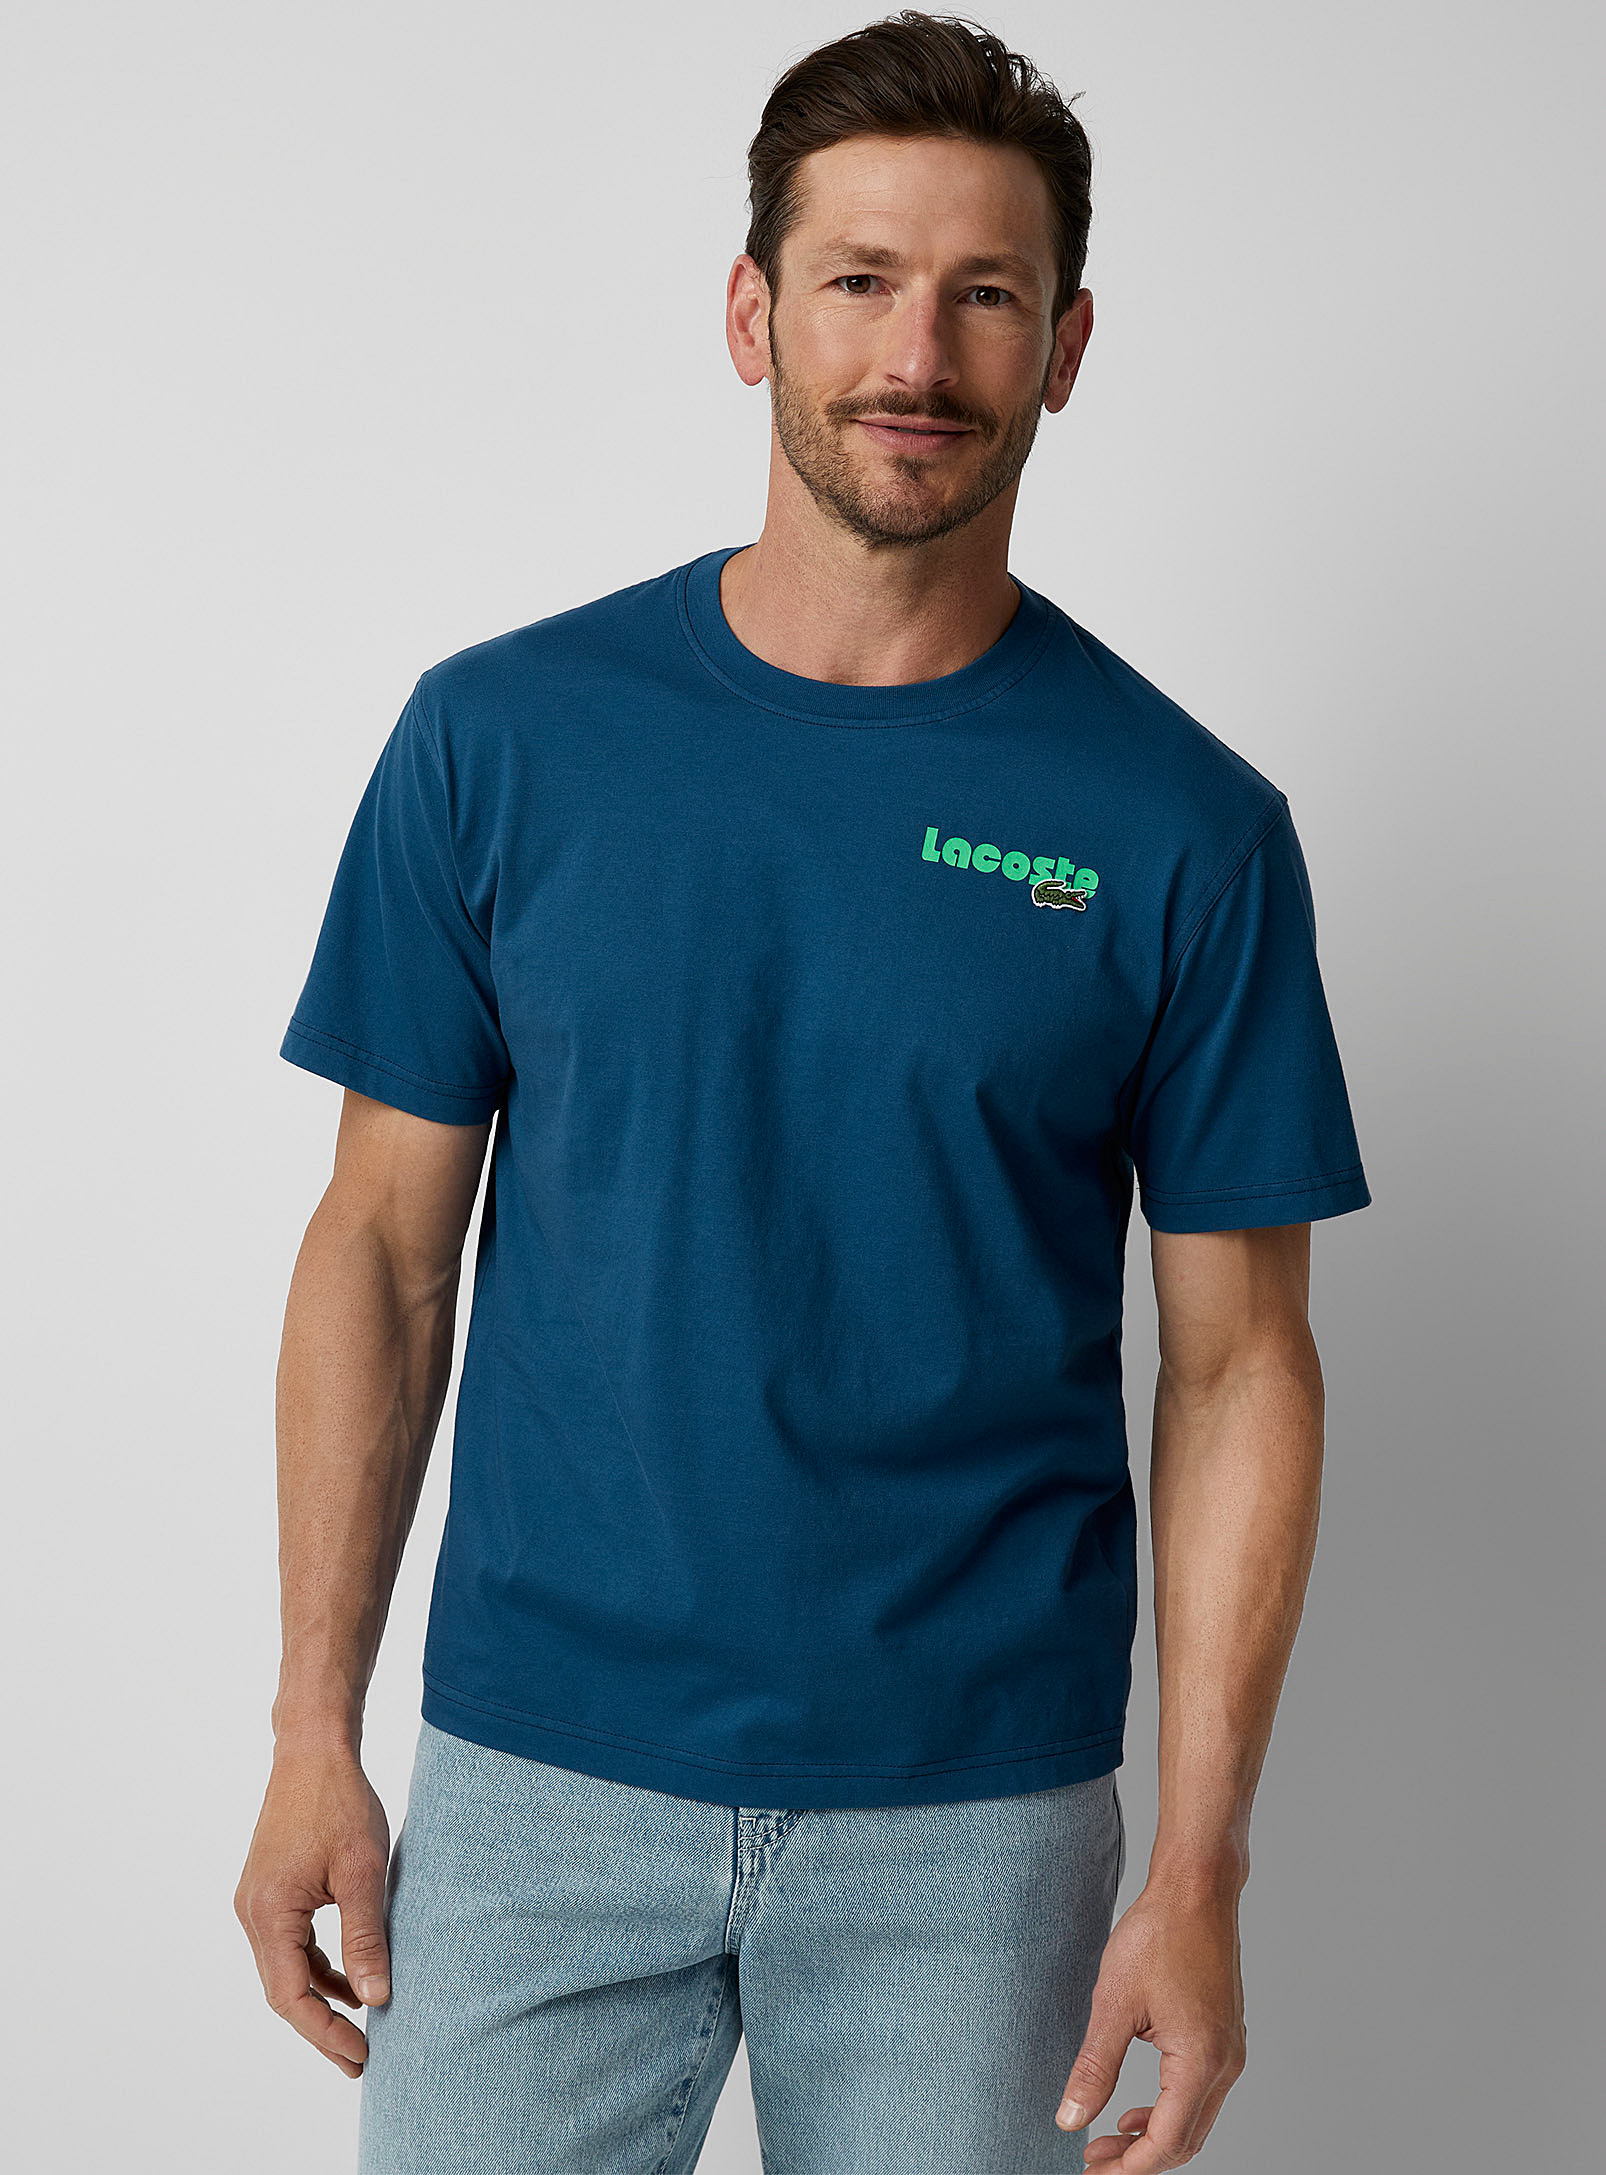 Lacoste - Le t-shirt logo typo croco